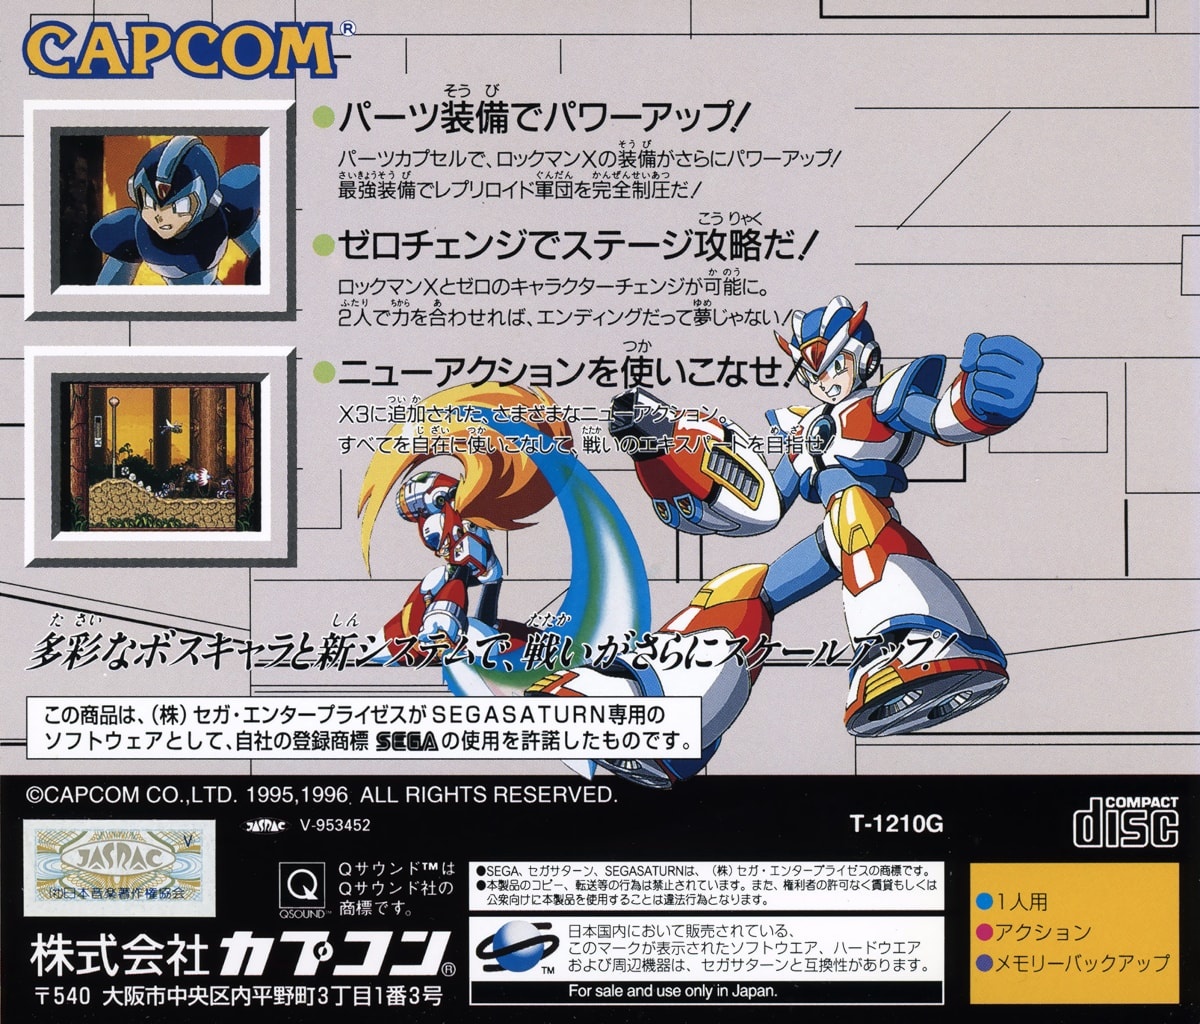 Mega Man X3 cover